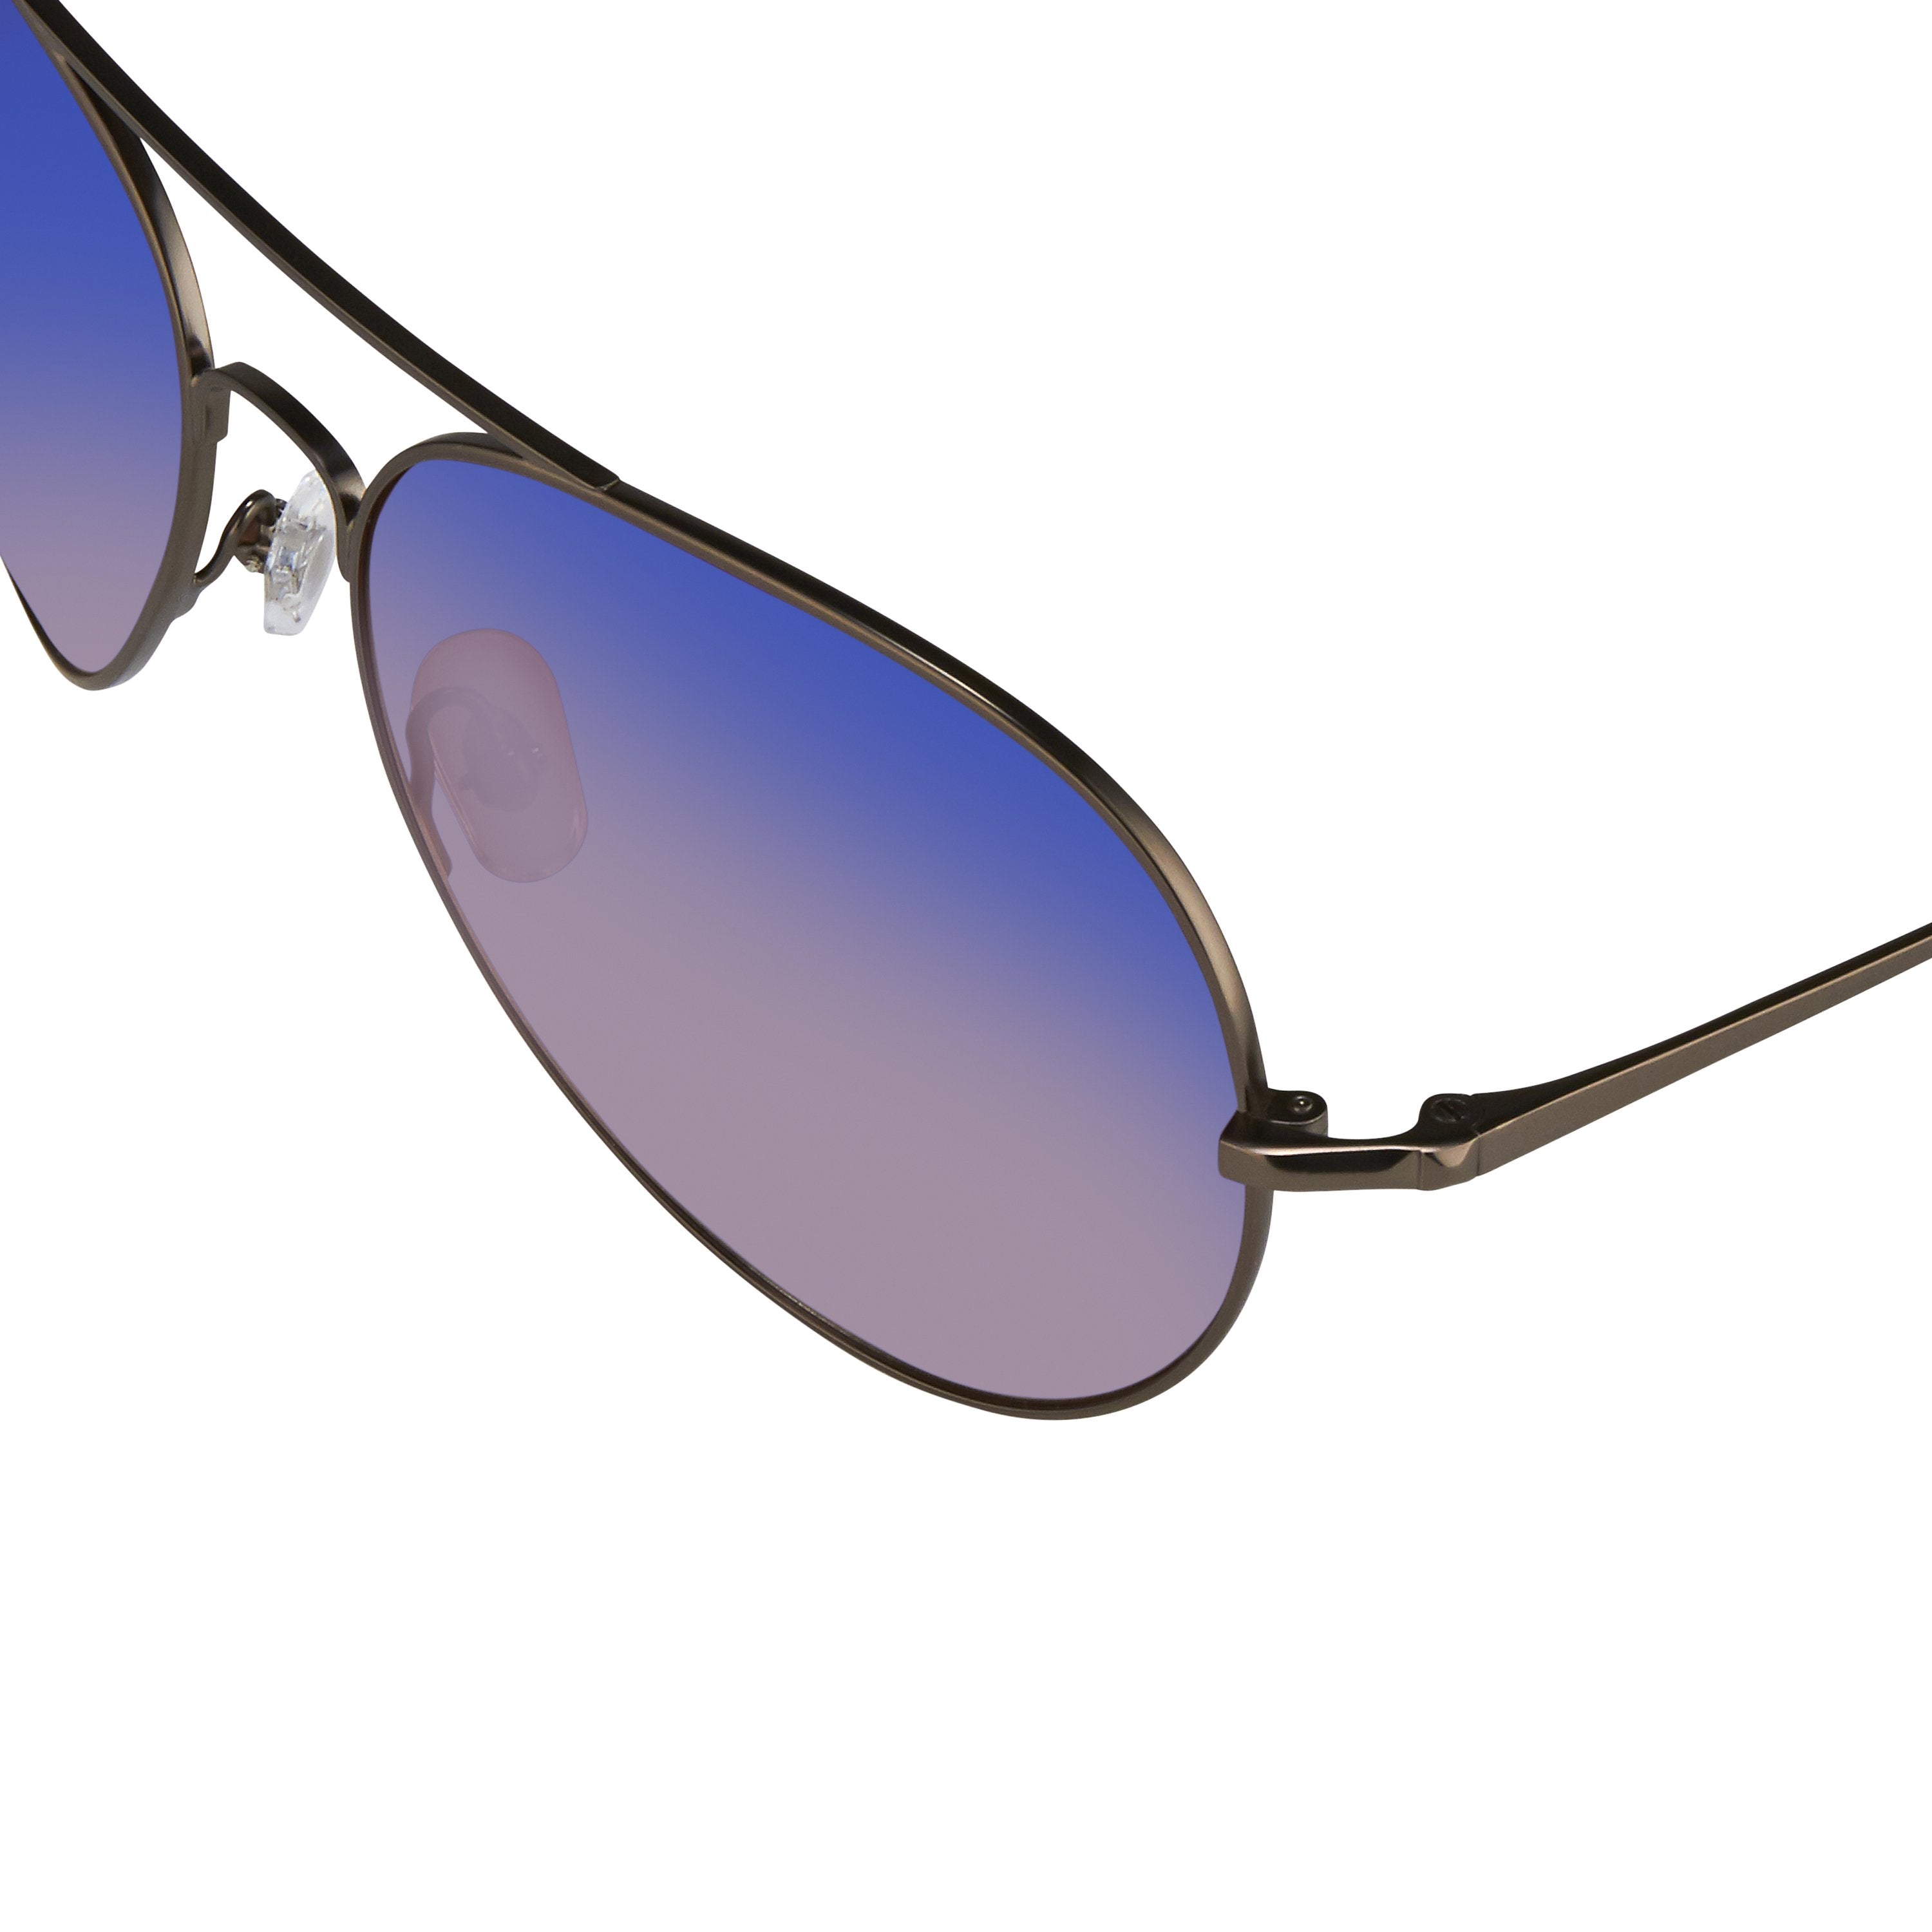 Color_MW130C17SUN - Matthew Williamson 130 C17 Aviator Sunglasses